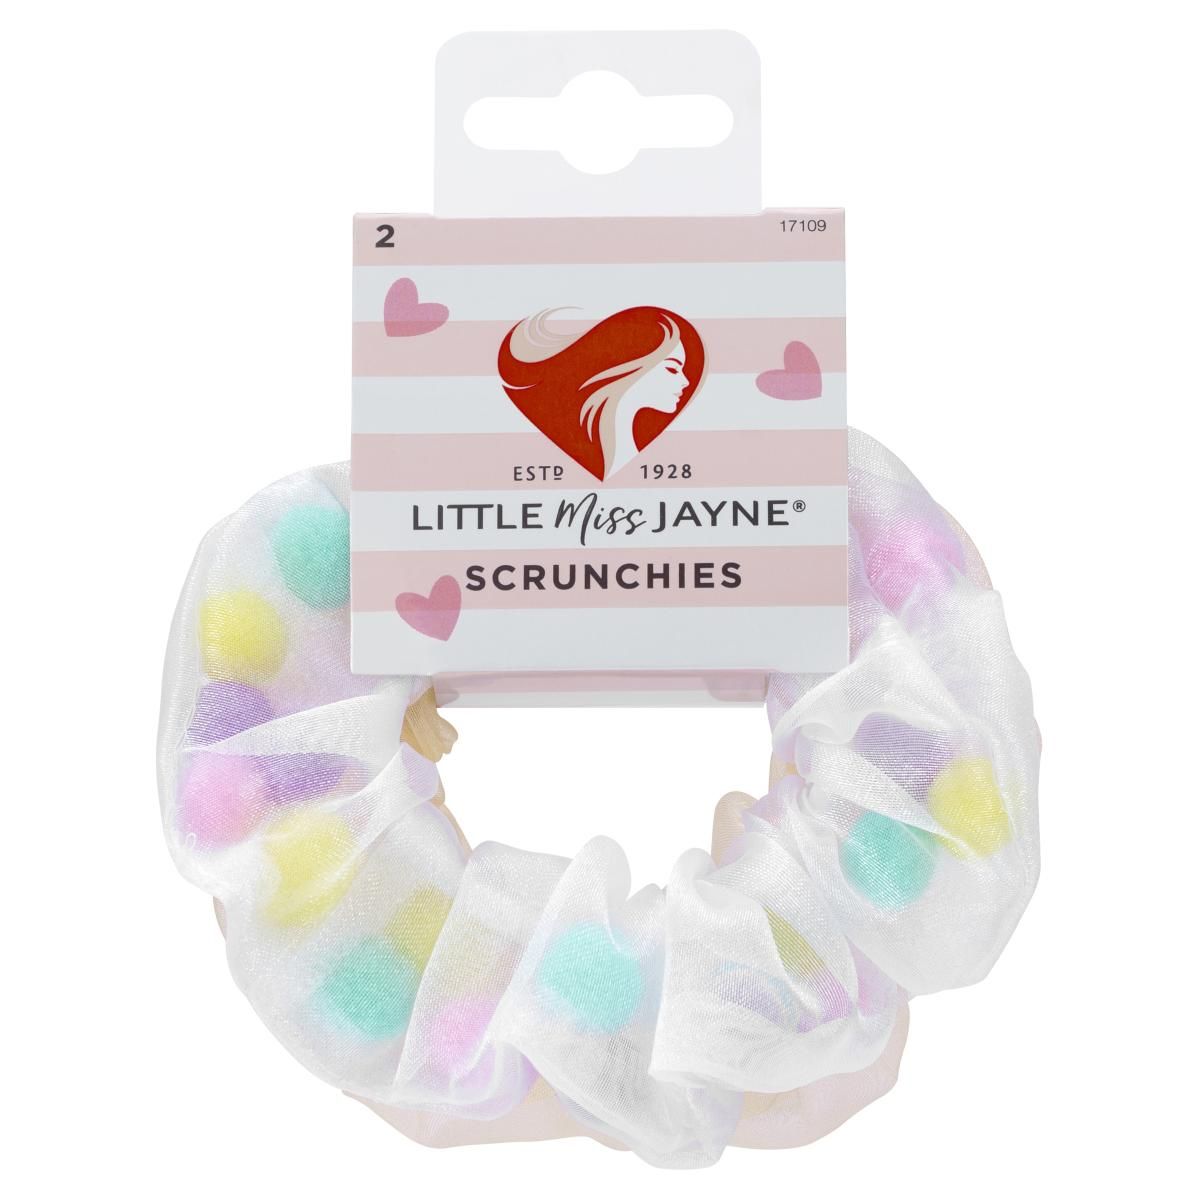 Little Miss Jayne Scrunchies 2 Pack - Direct Chemist Outlet